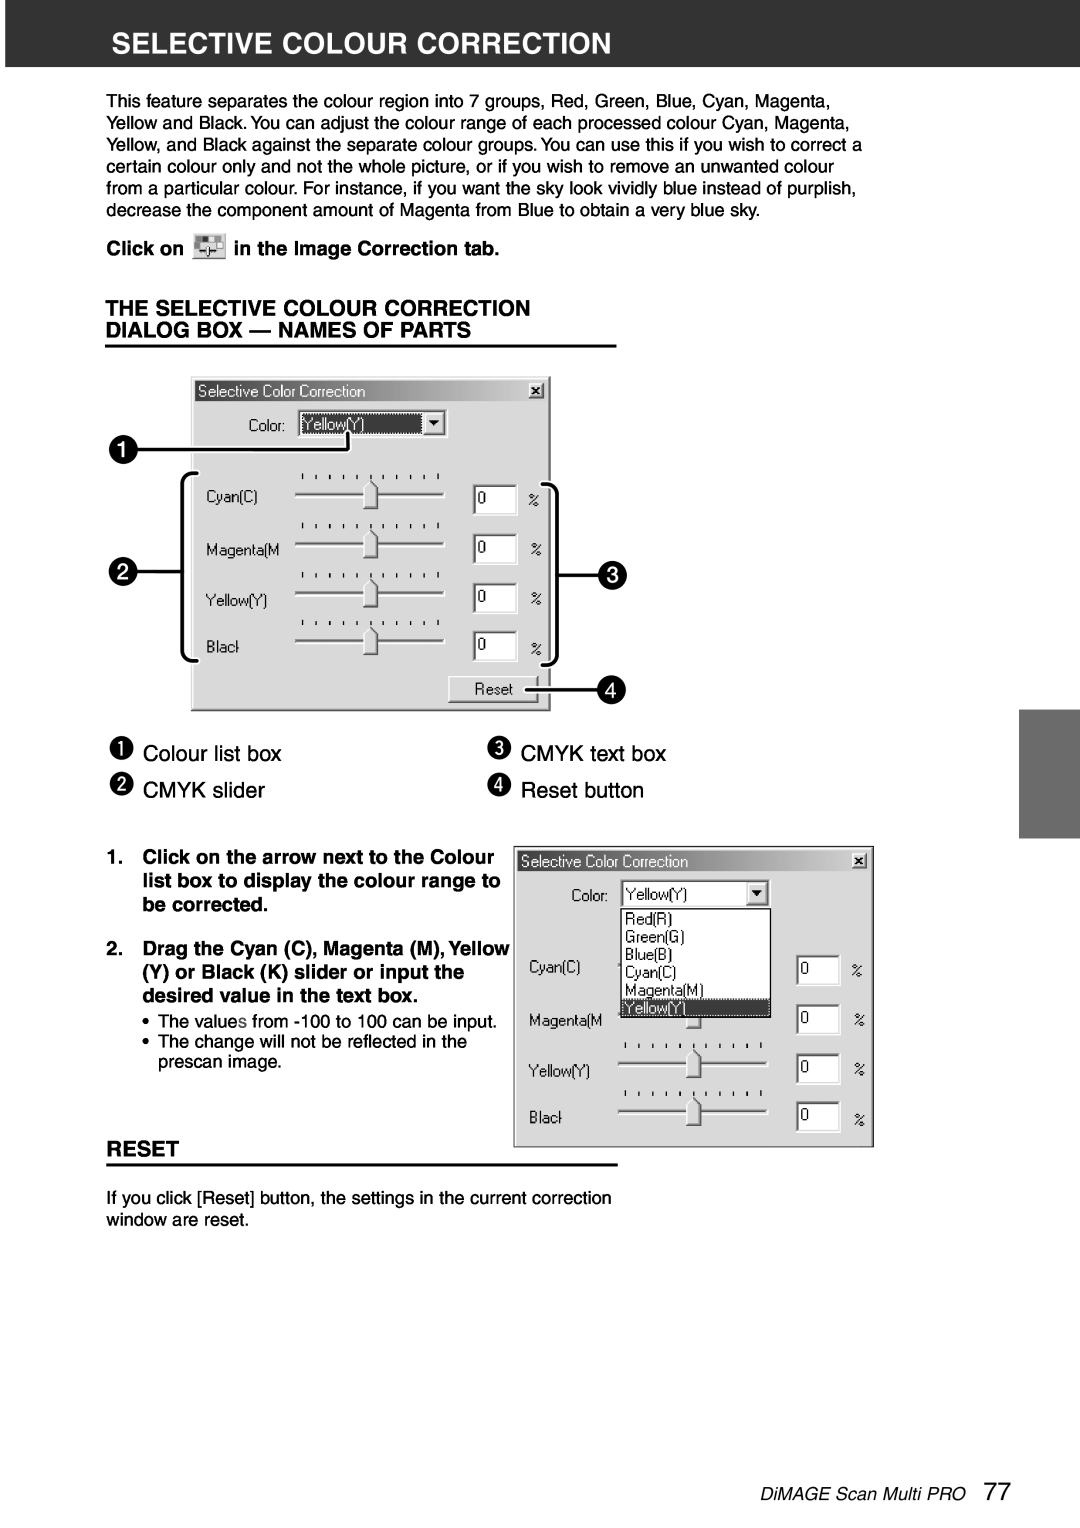 Konica Minolta Scan Multi PRO instruction manual The Selective Colour Correction Dialog Box - Names Of Parts, Reset 